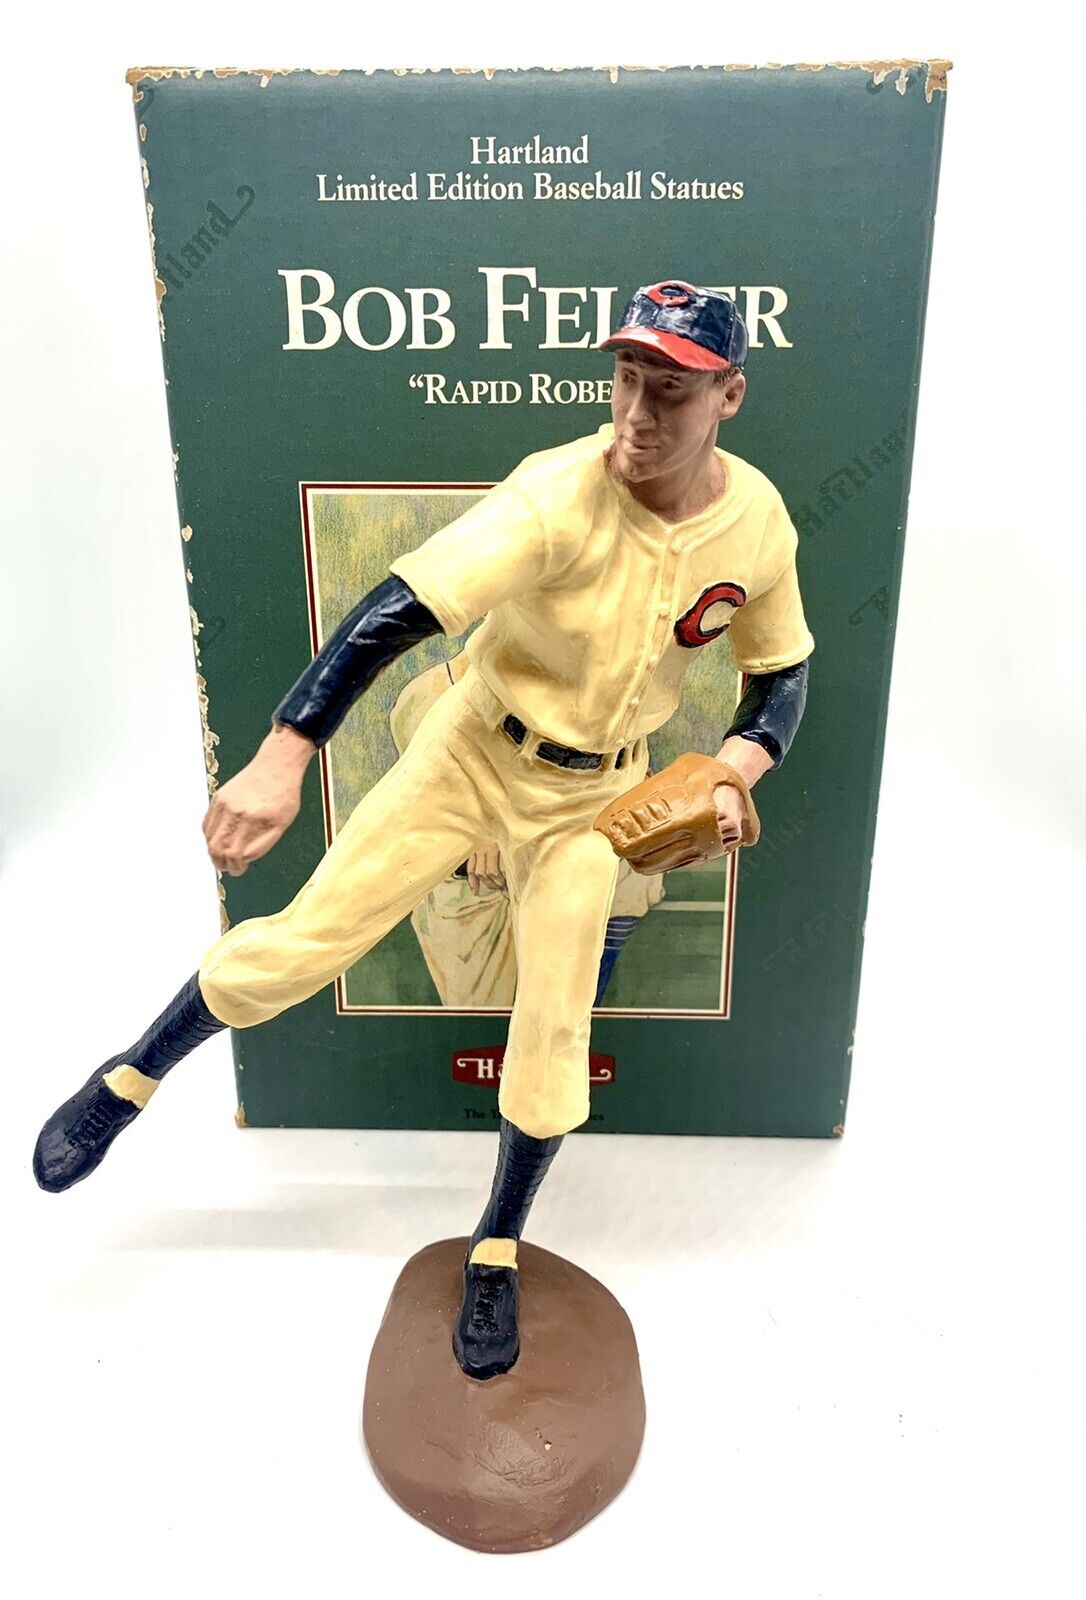 1990 Bob Feller Cleveland Indians Hartland Statue with Box SUPER RARE